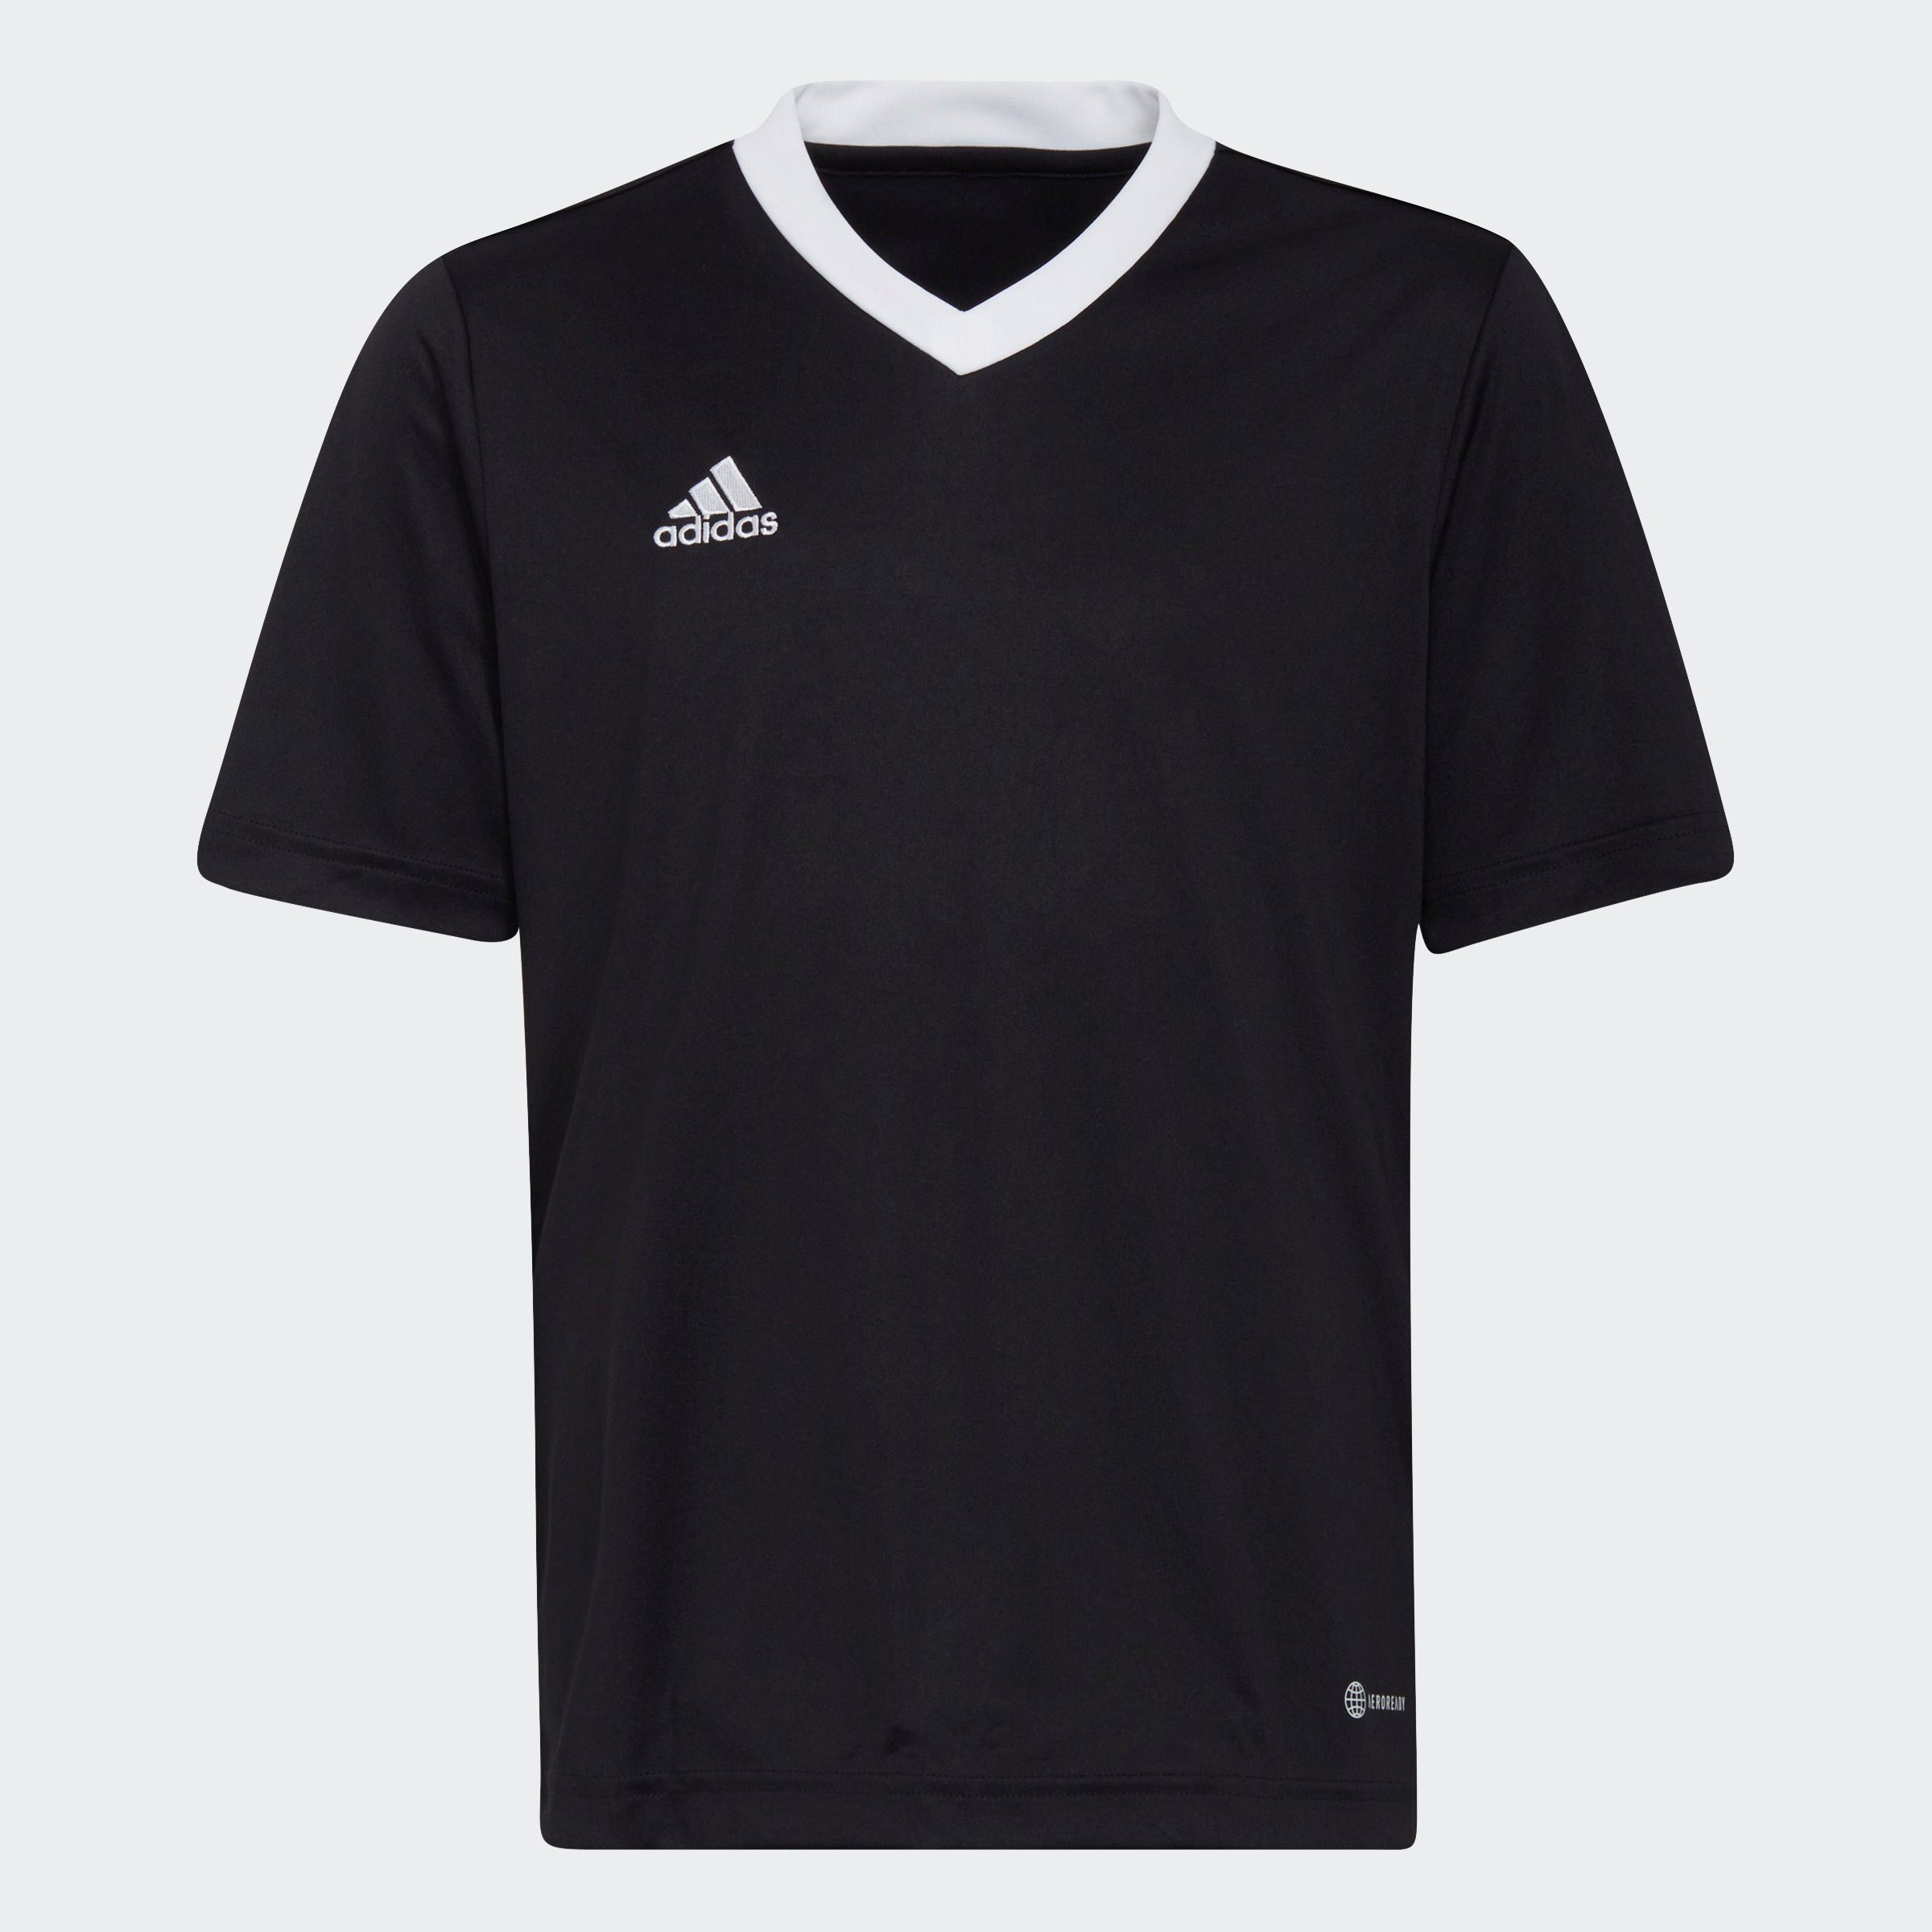 adidas performance voetbalshirt ent22 jsy y zwart